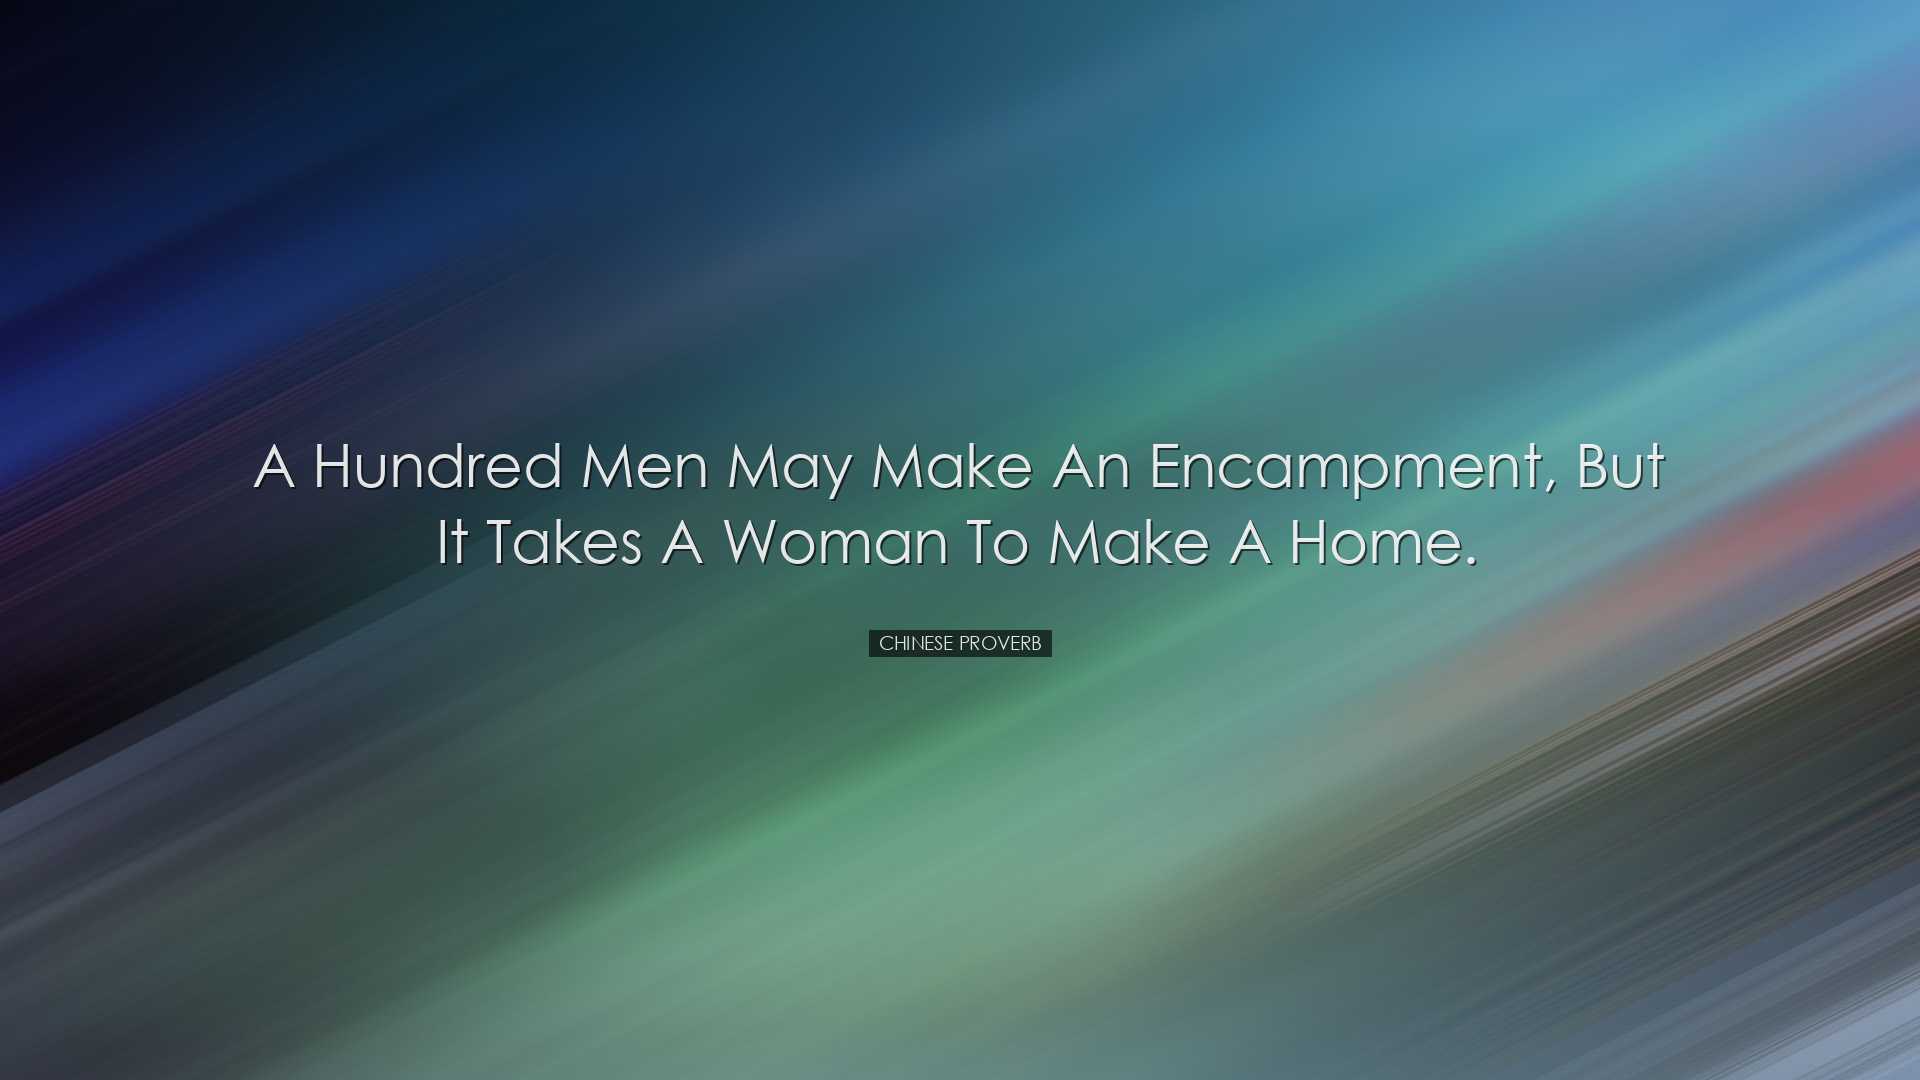 A hundred men may make an encampment, but it takes a woman to make